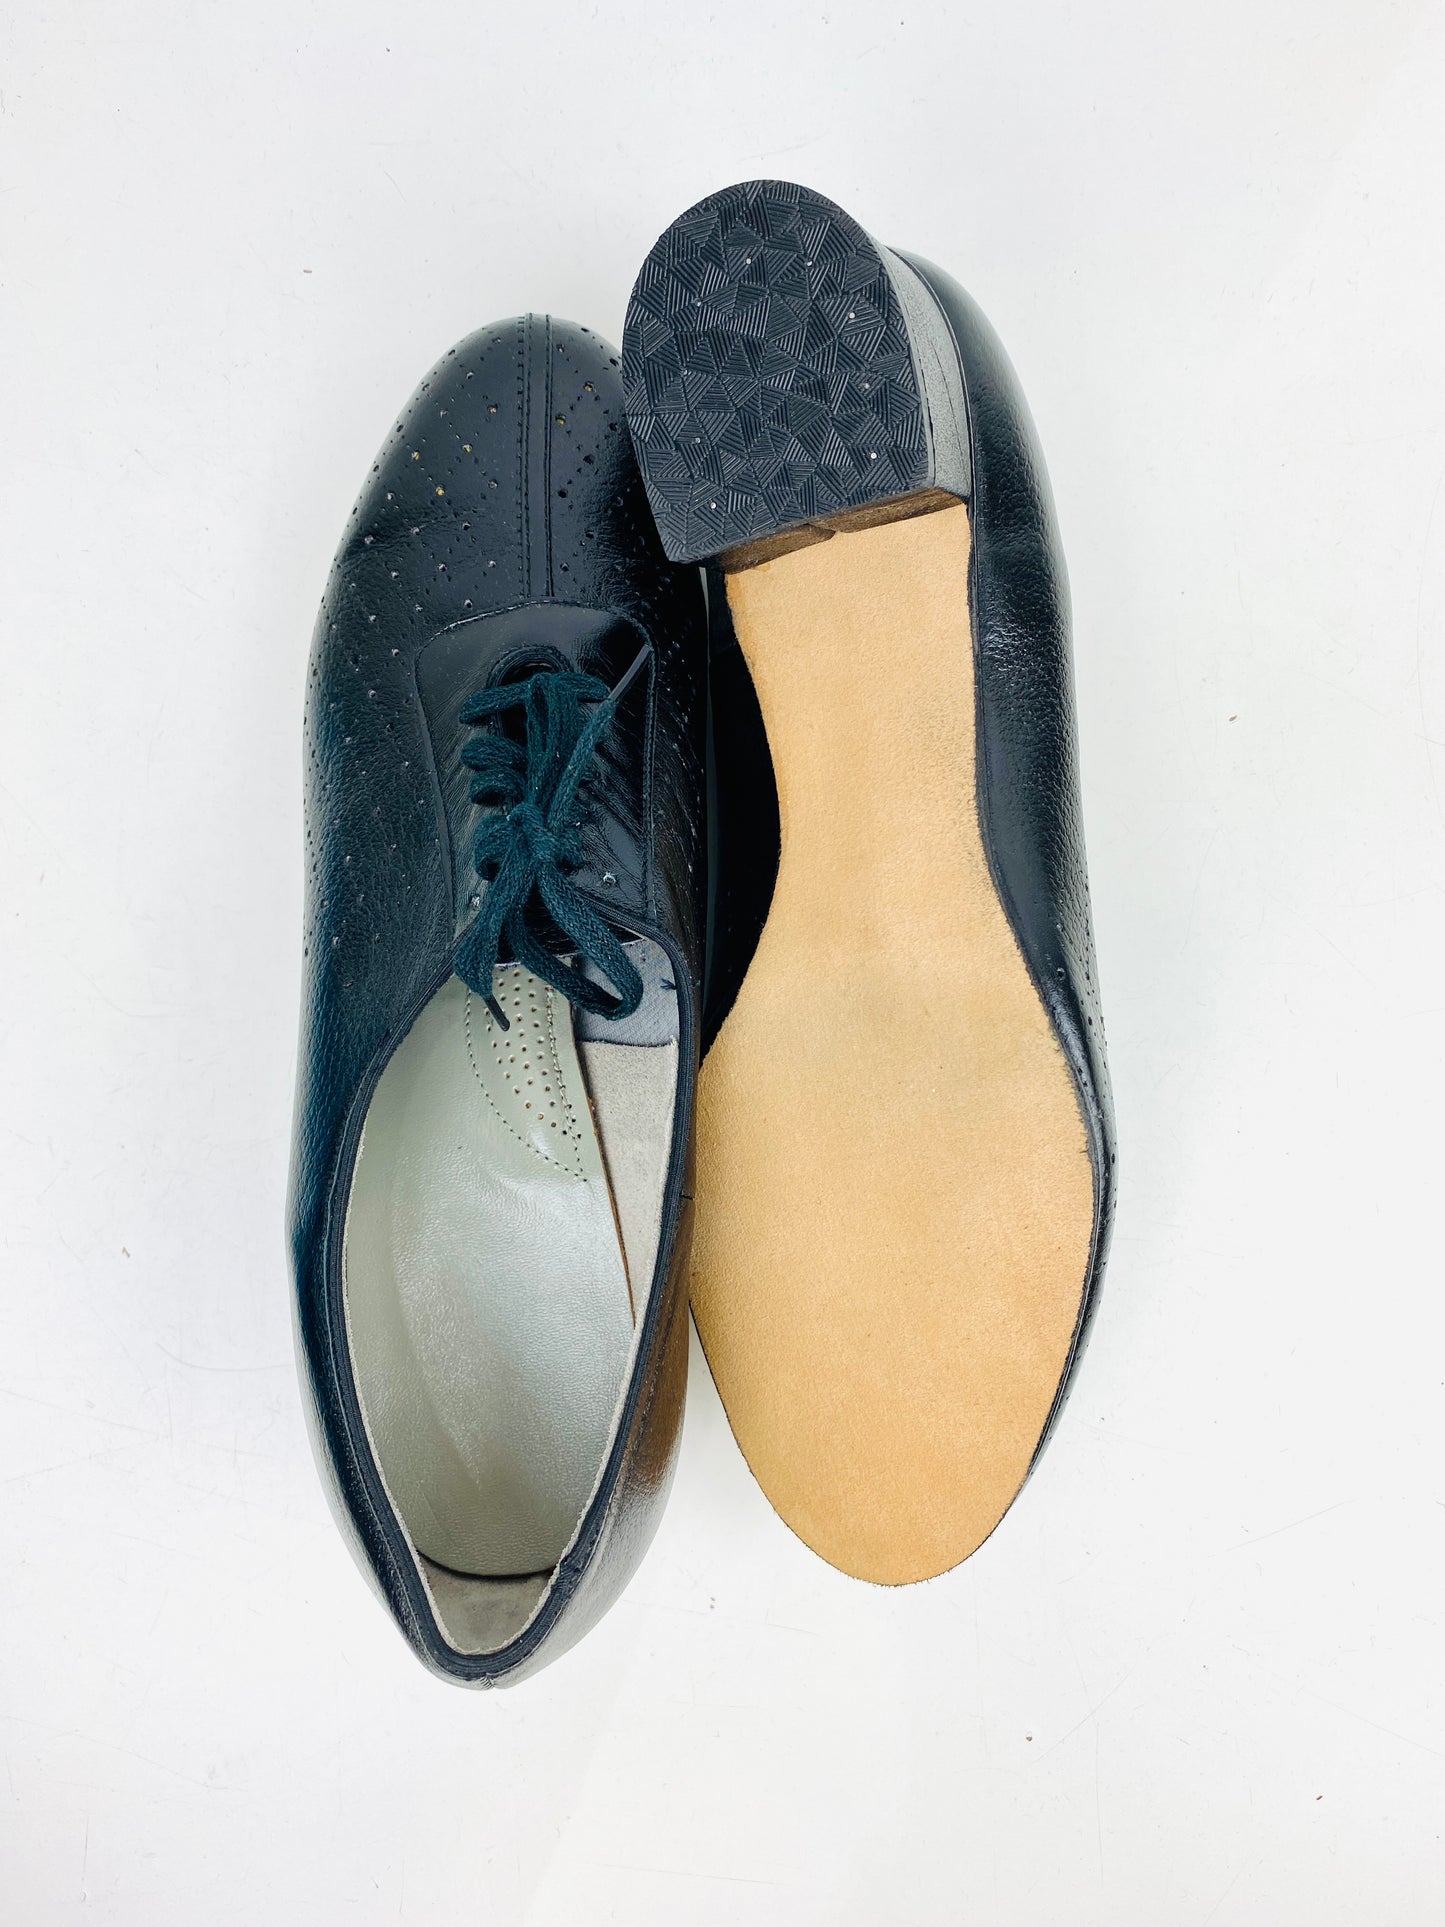 Vintage Deadstock Shoes, Women's 1980s Black Leather Oxford's, Cuban Heels, NOS